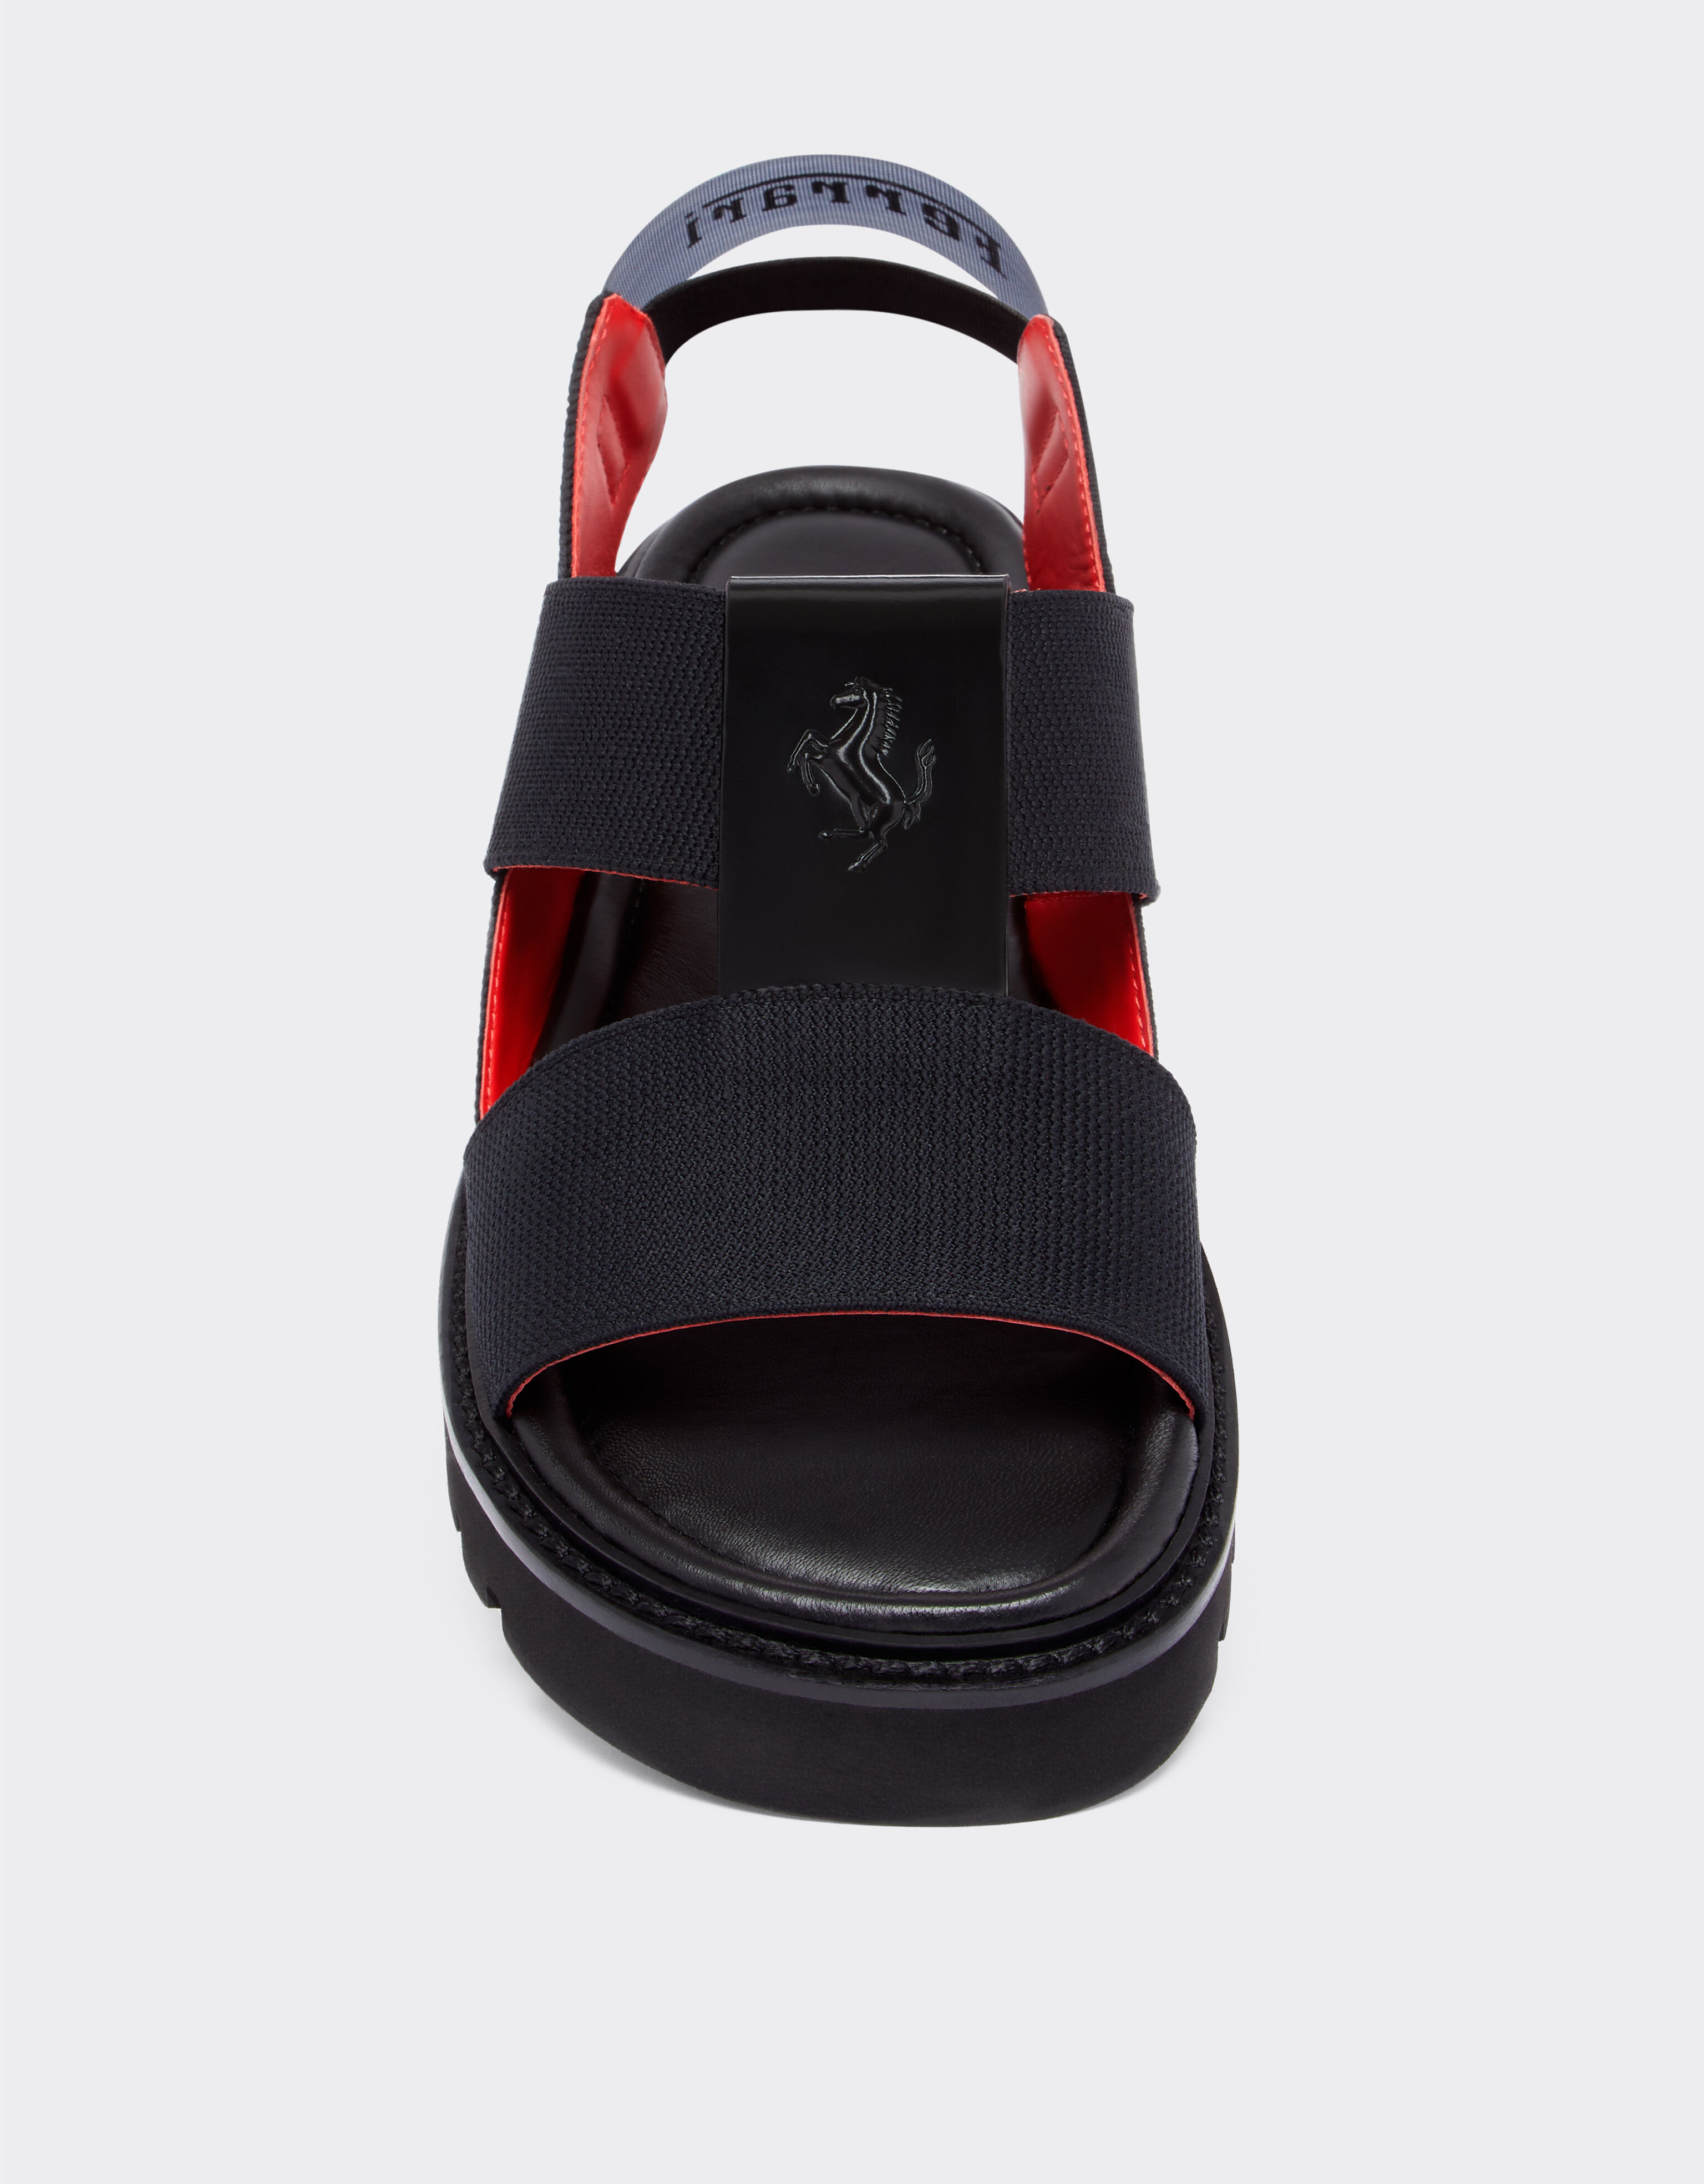 Ferrari Sandals in leather and elasticated mesh Black 20720f